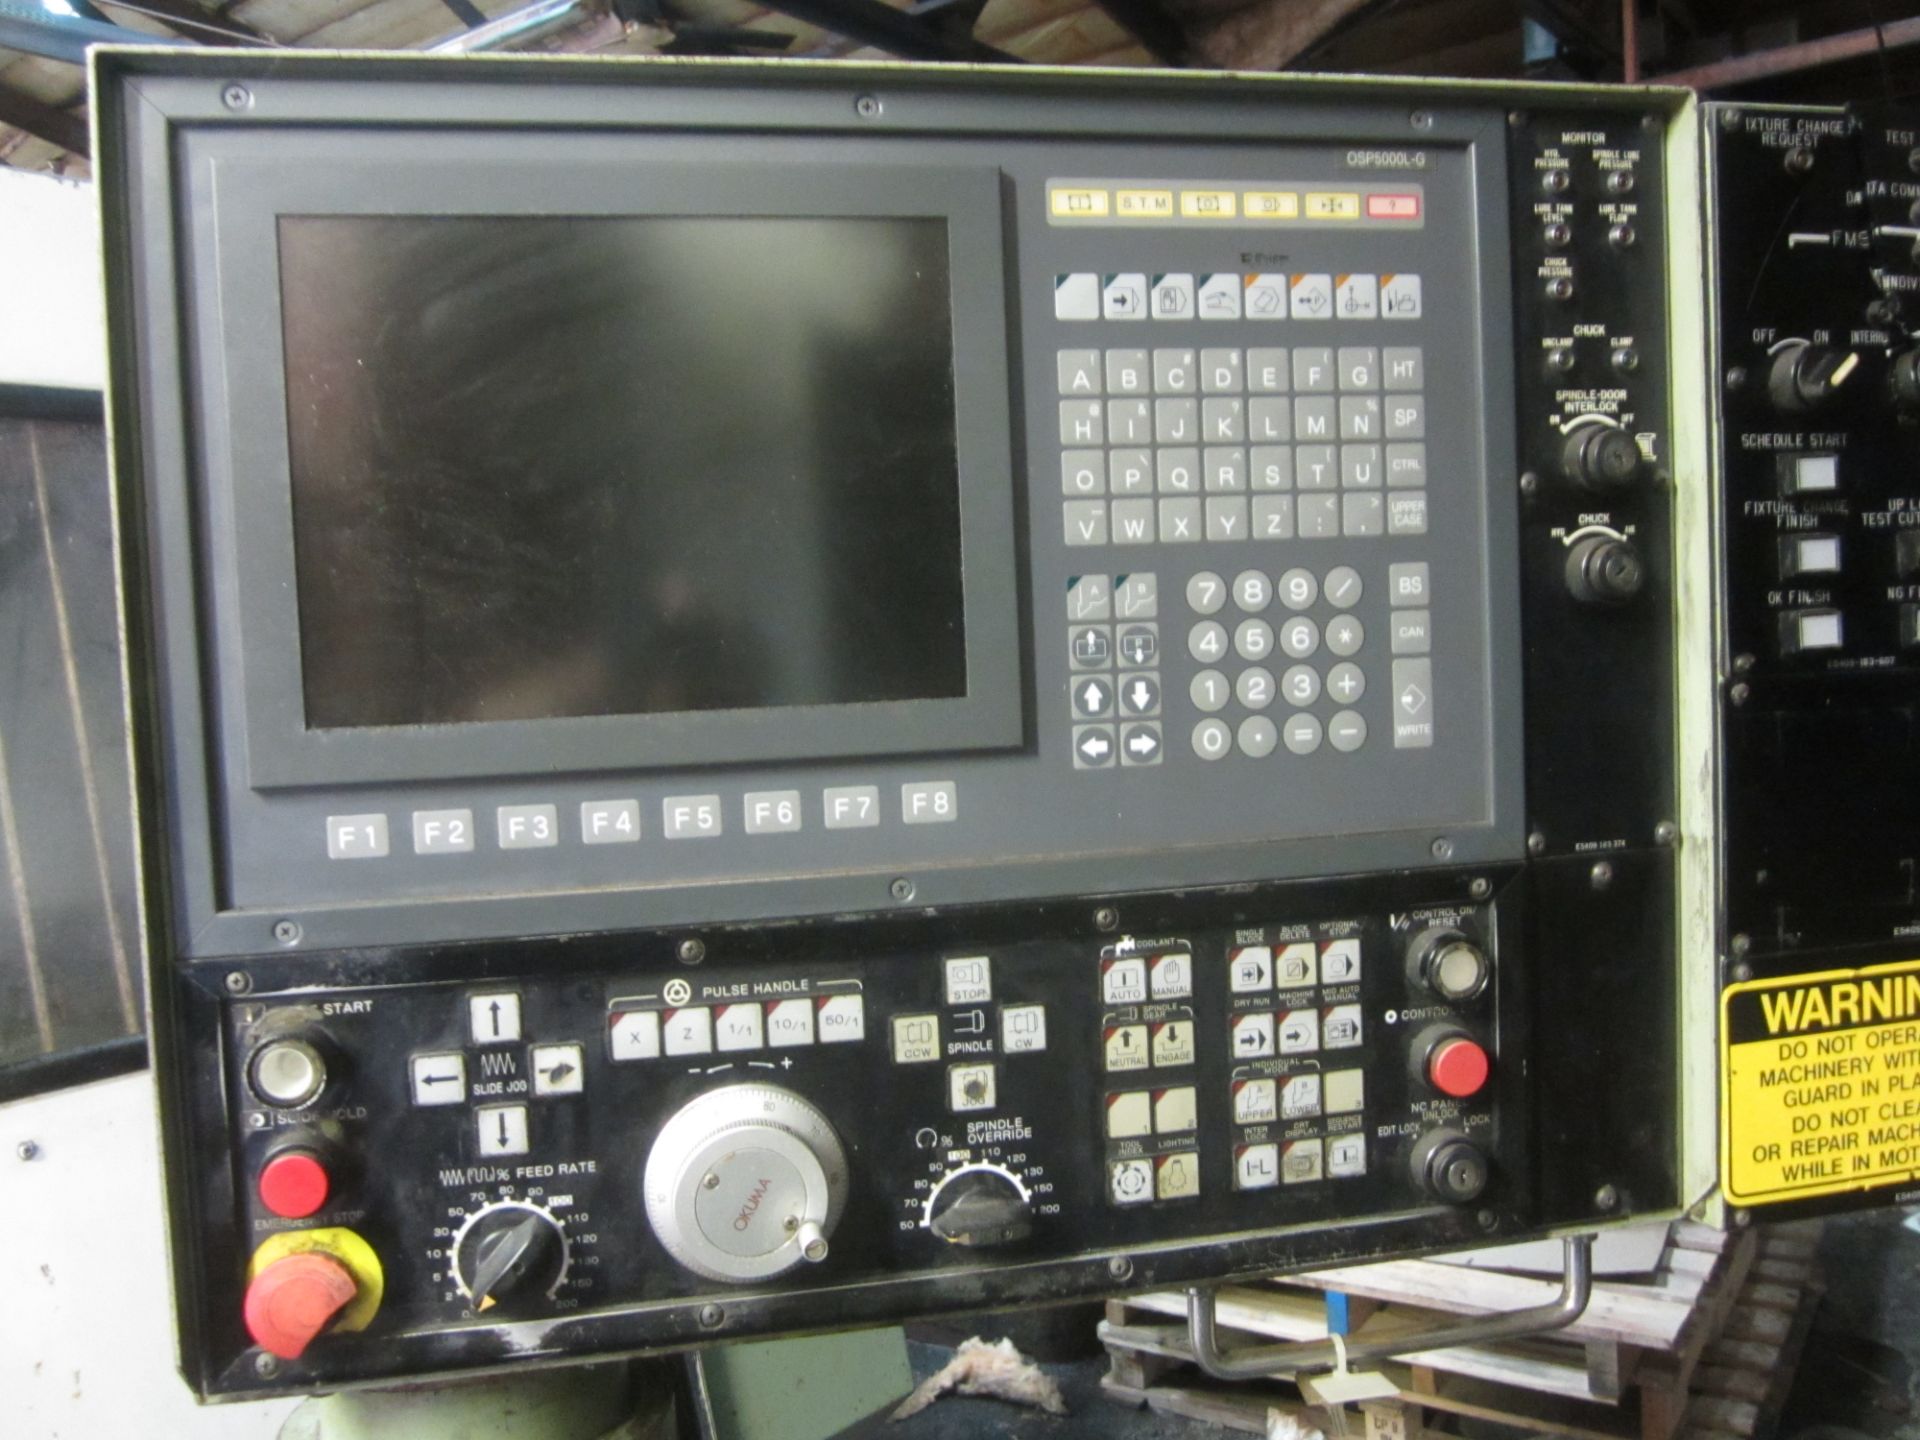 Okuma Model LC-20/2SC CNC Turning Center, s/n 3688, OSP-5000L-G CNC Control, 10" 3-Jaw Chuck, - Image 6 of 12